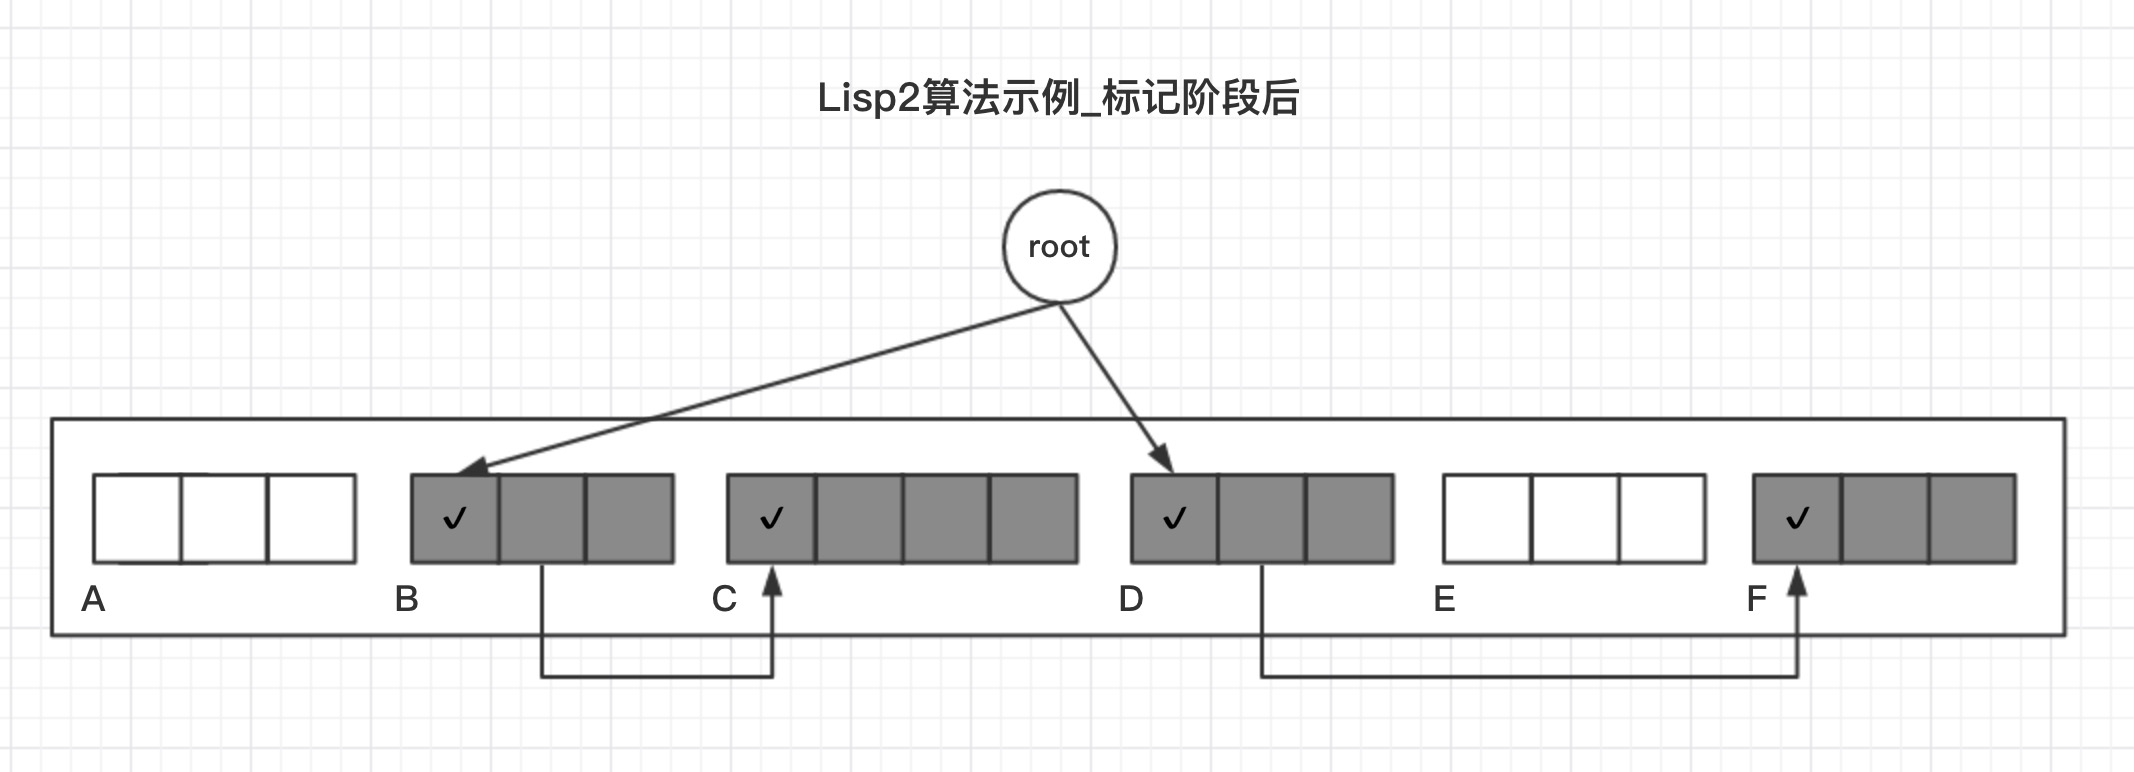 Lisp2算法示例_标记阶段后